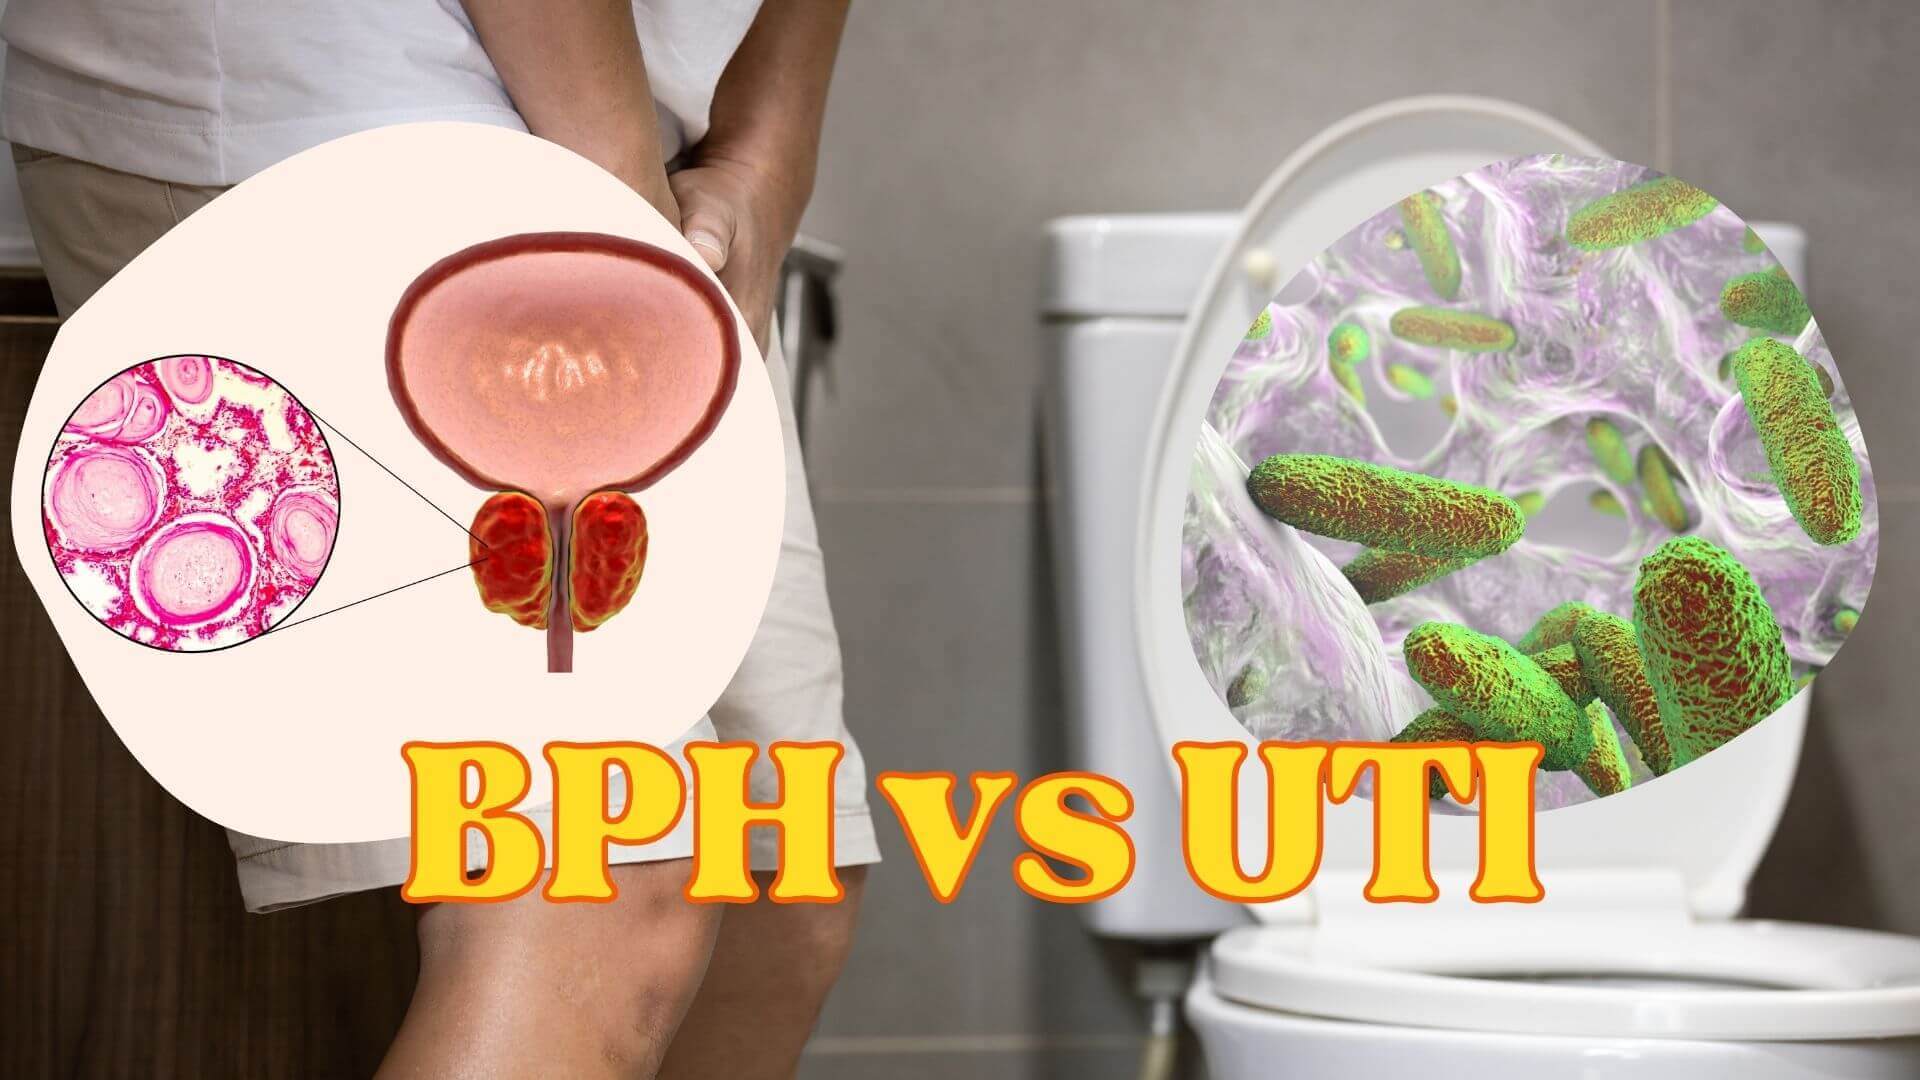 UTI (Urinary Tract Infection) or BPH (Benign Prostatic Hyperplasia)